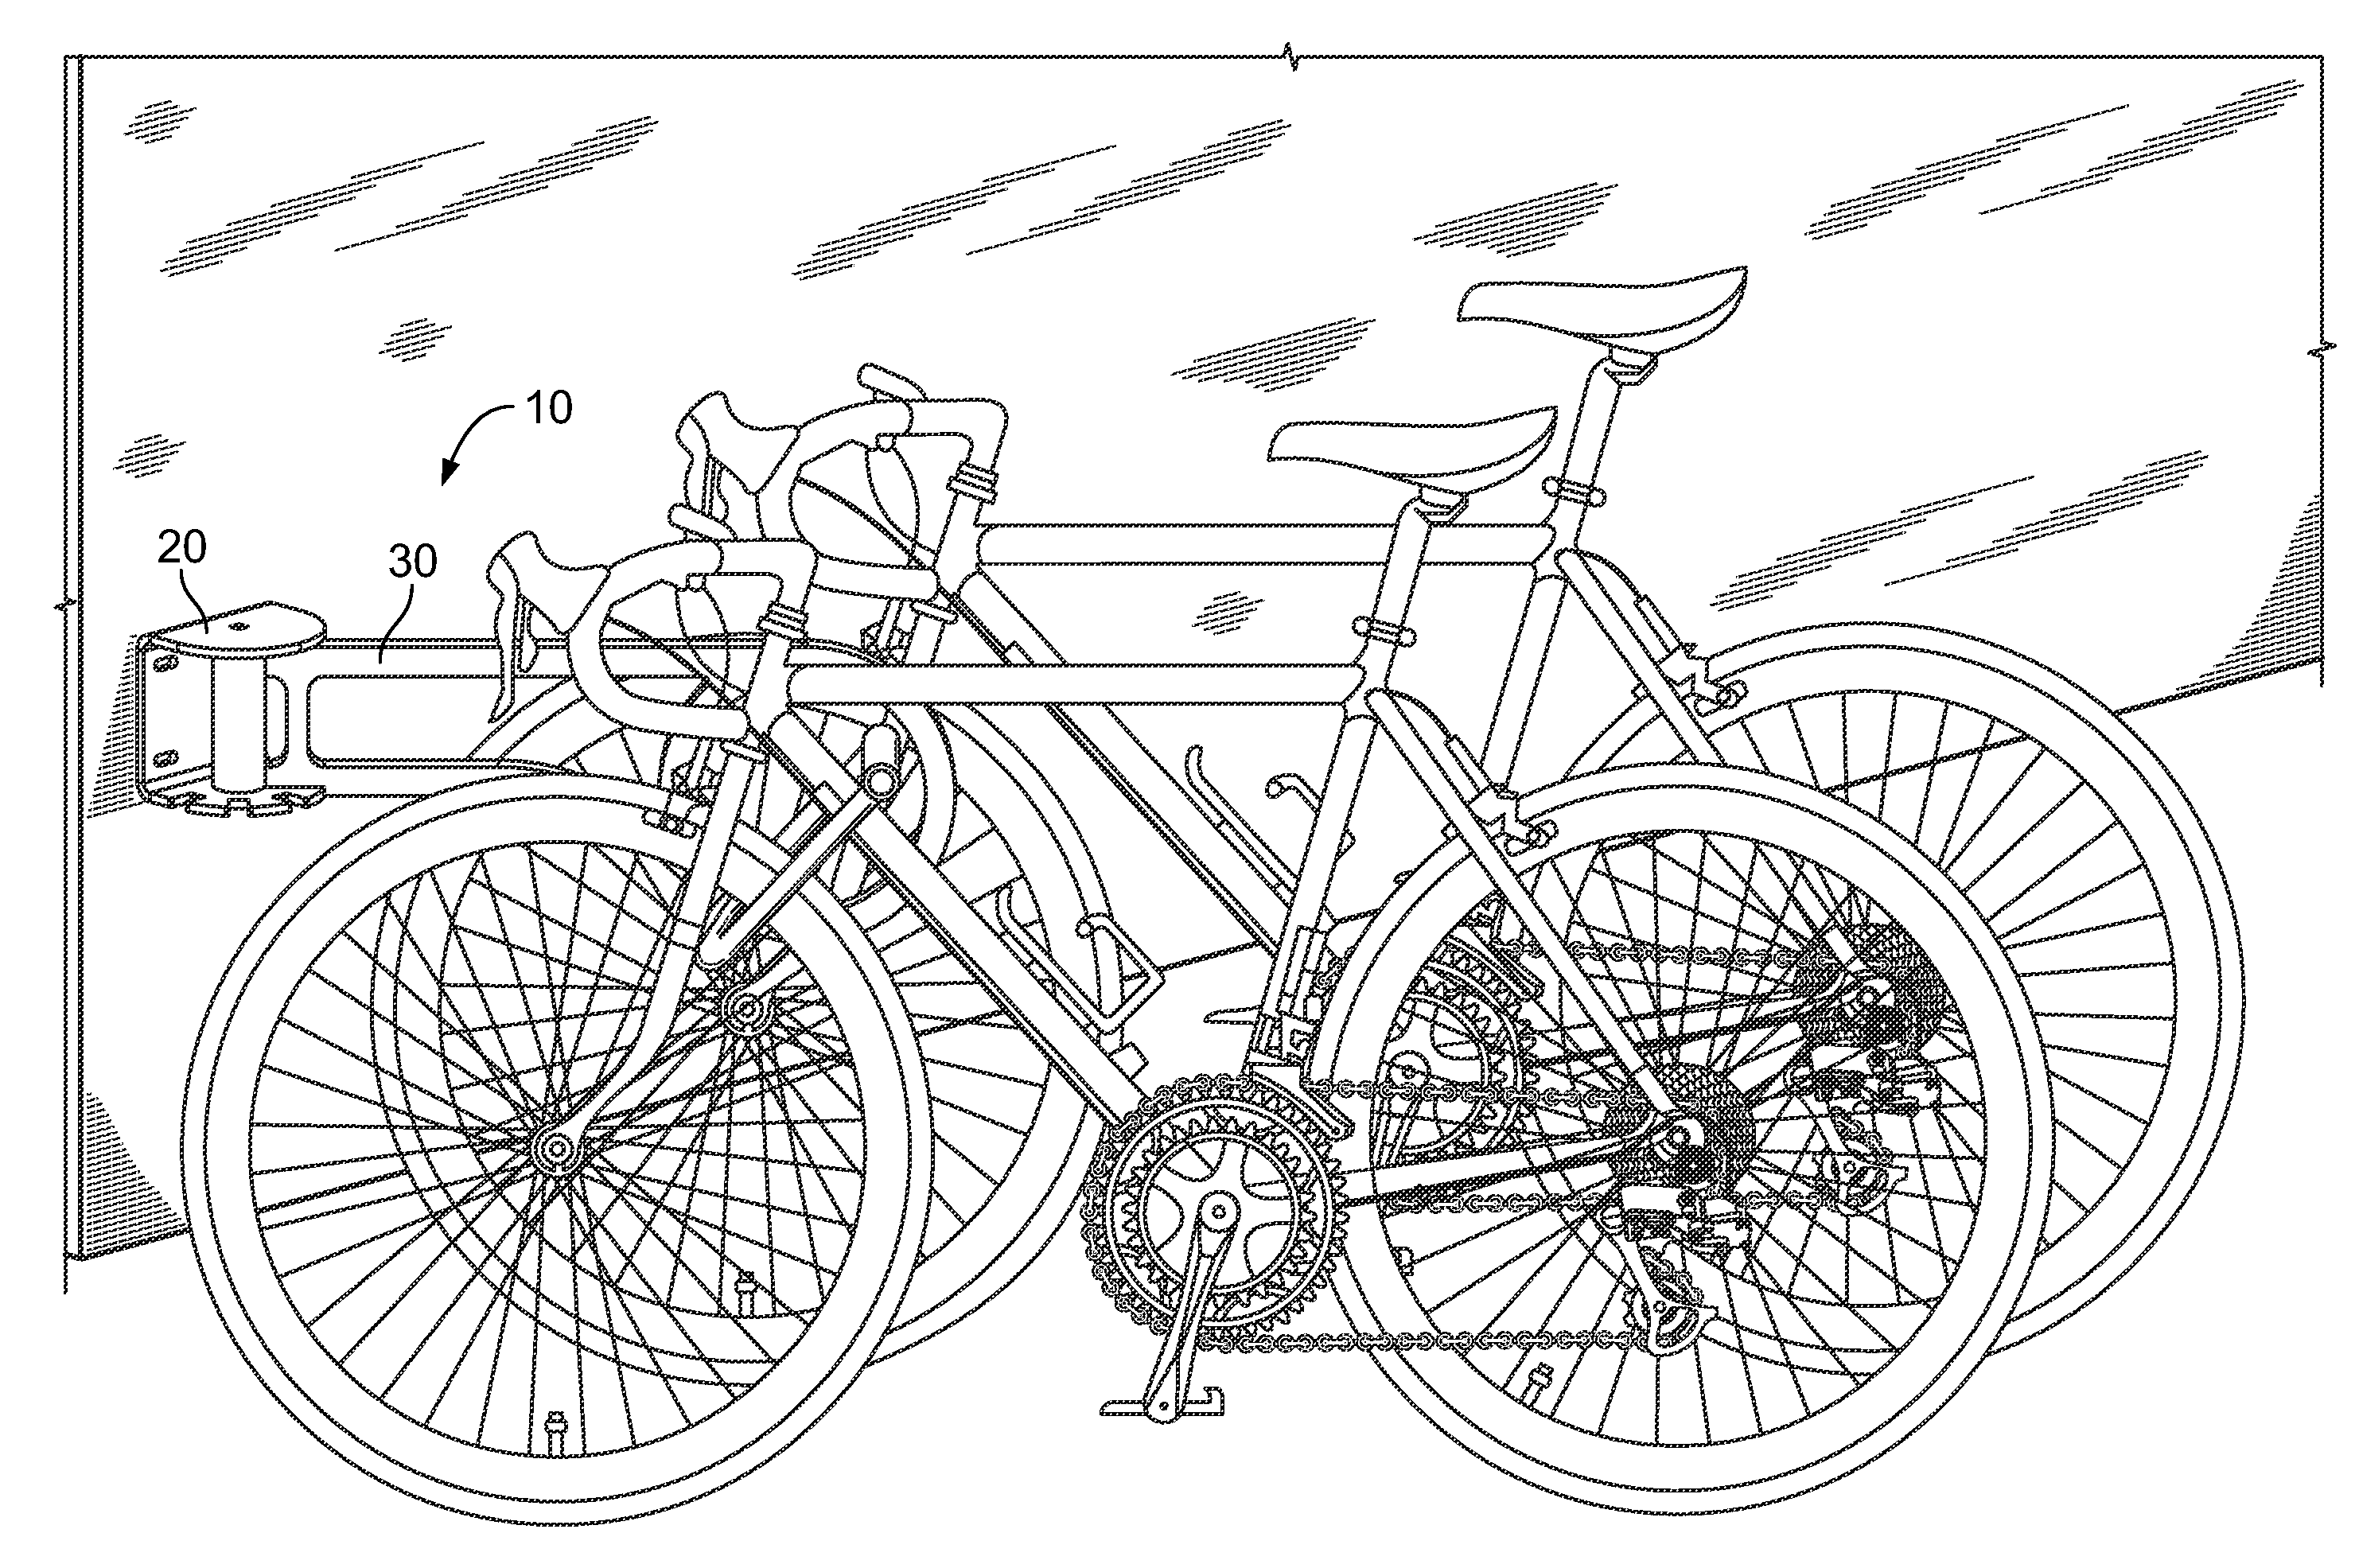 Space-saving bicycle rack